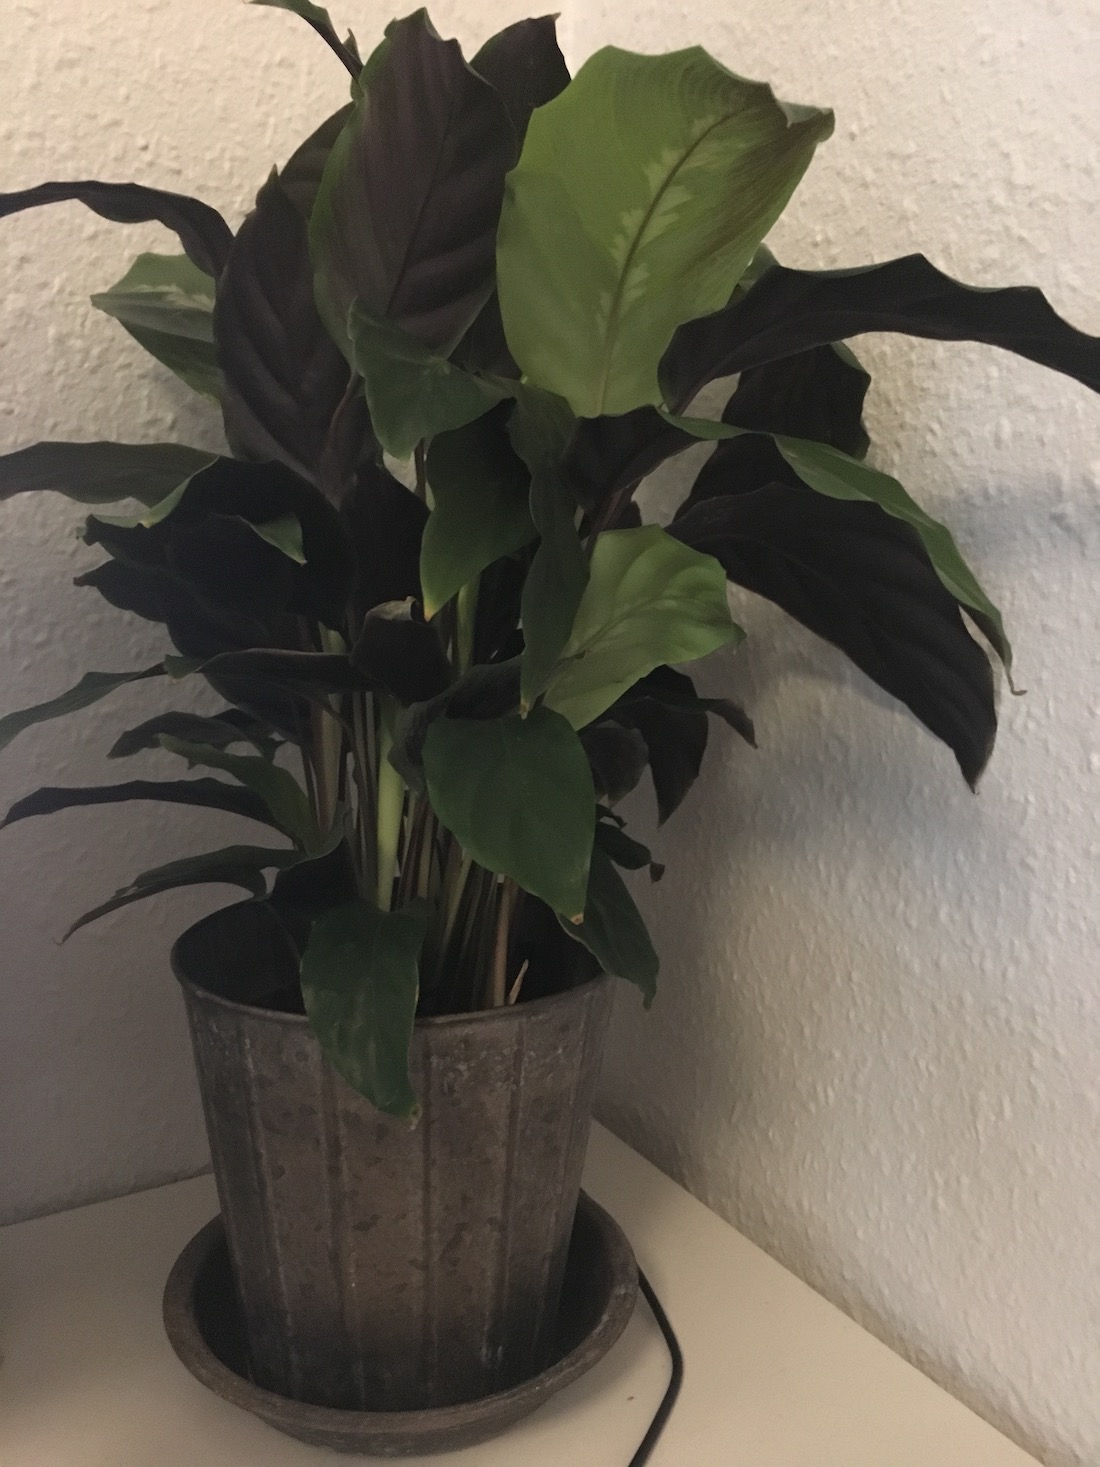 my new green plant baby 2019 jan